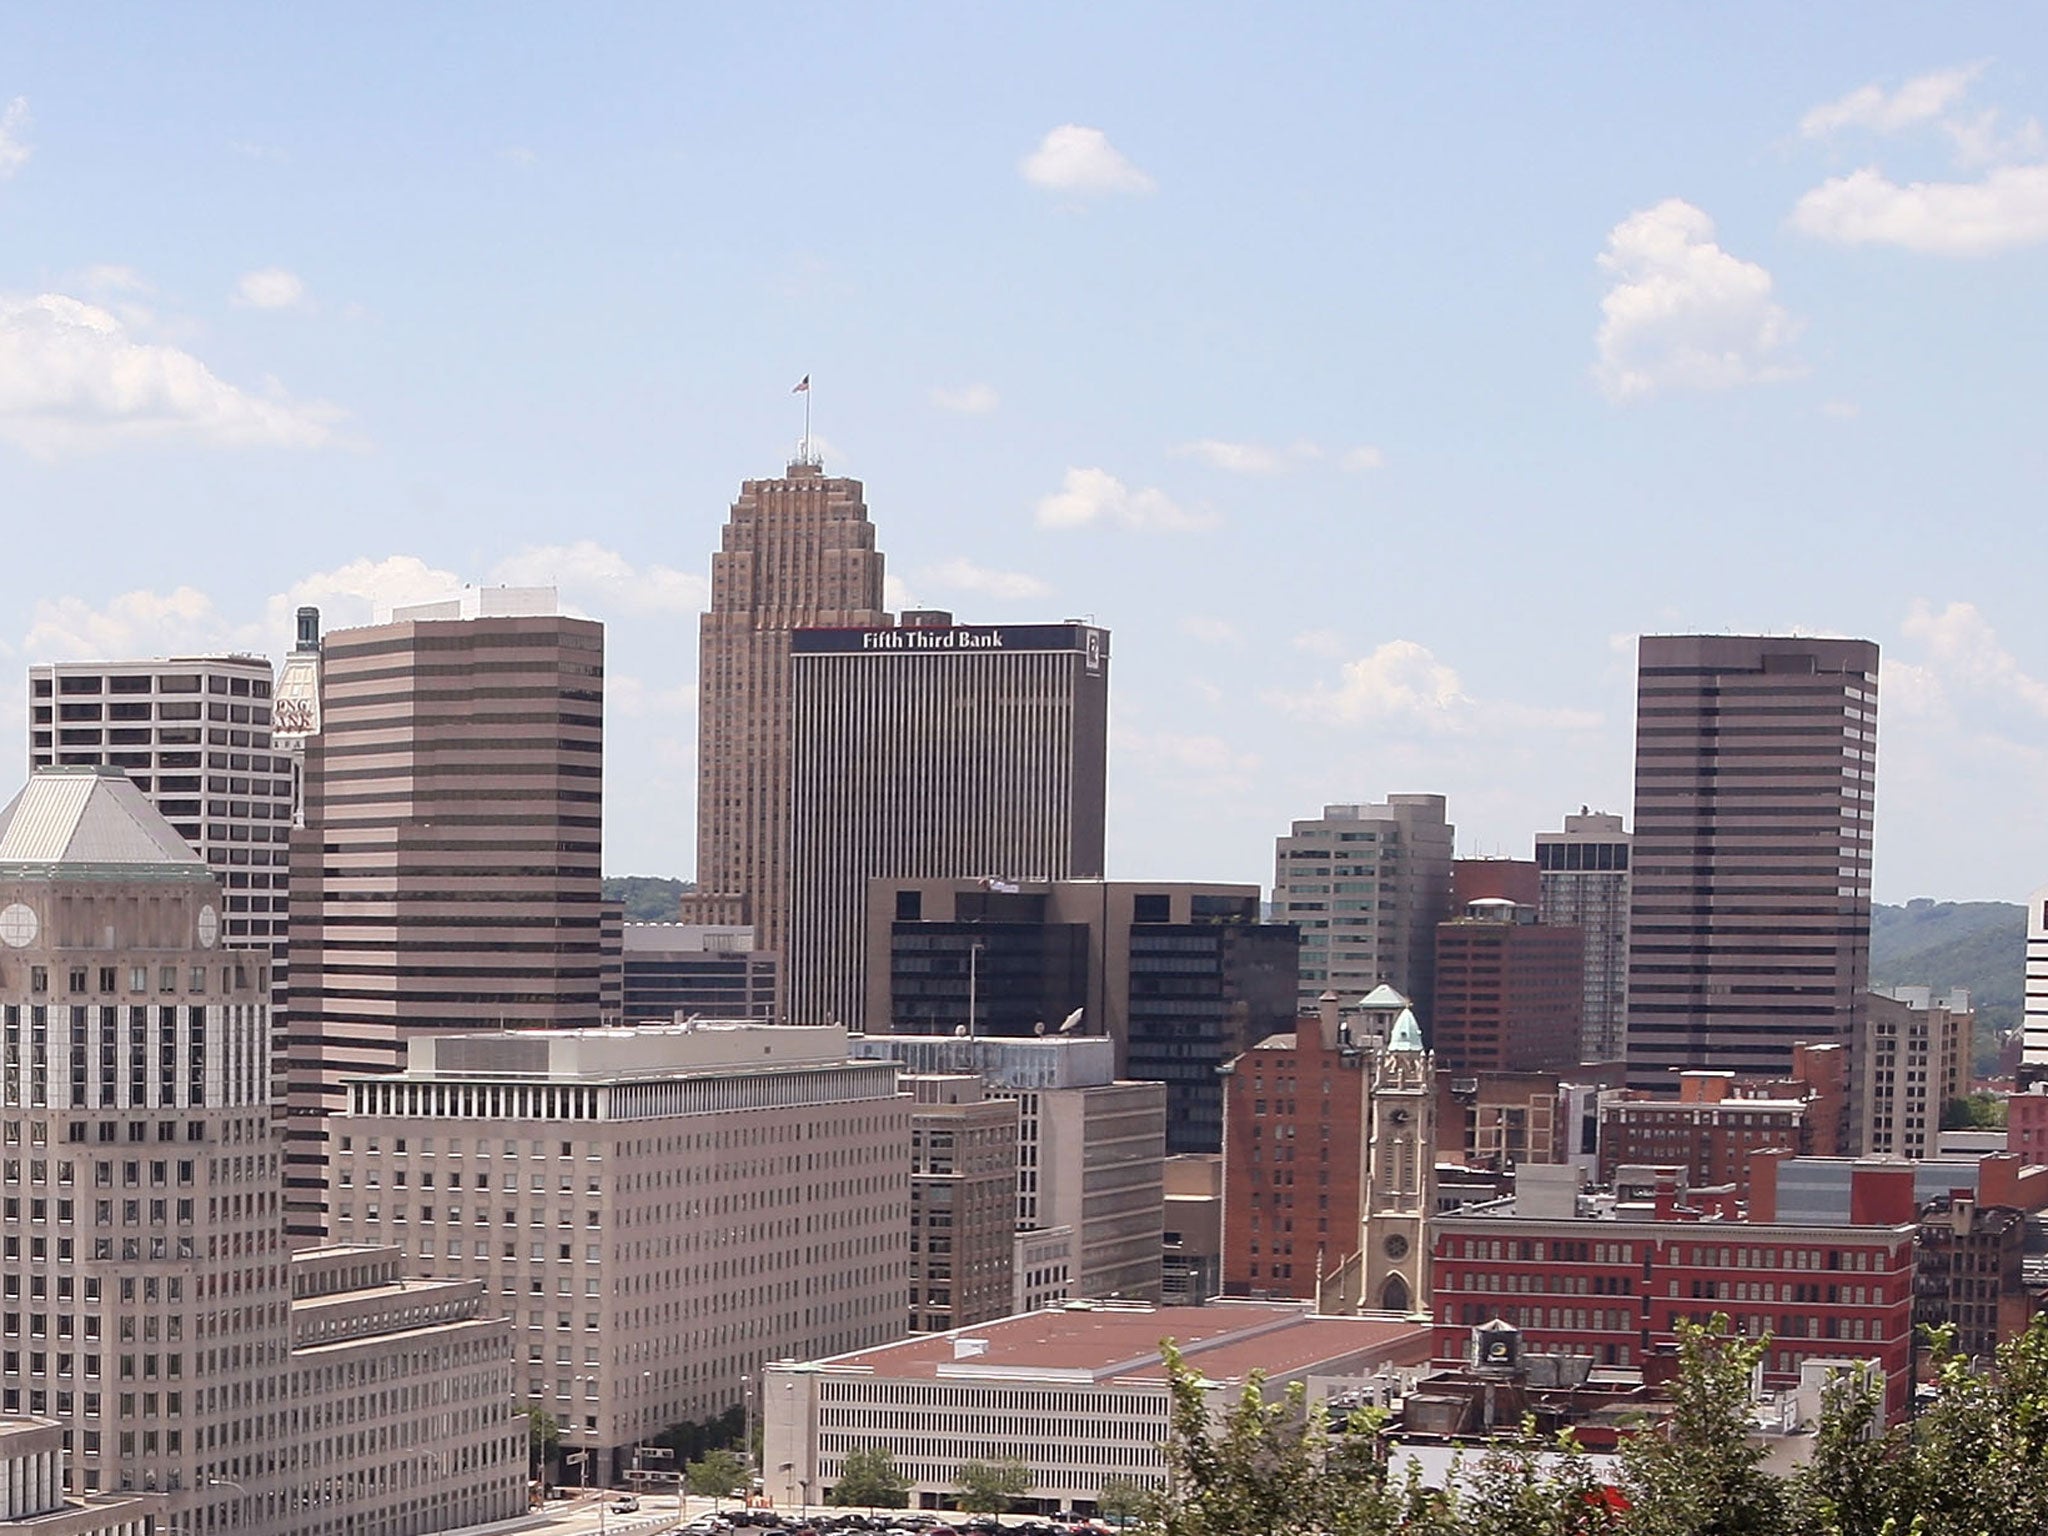 The skyline of Cincinnati, where the shooting took place